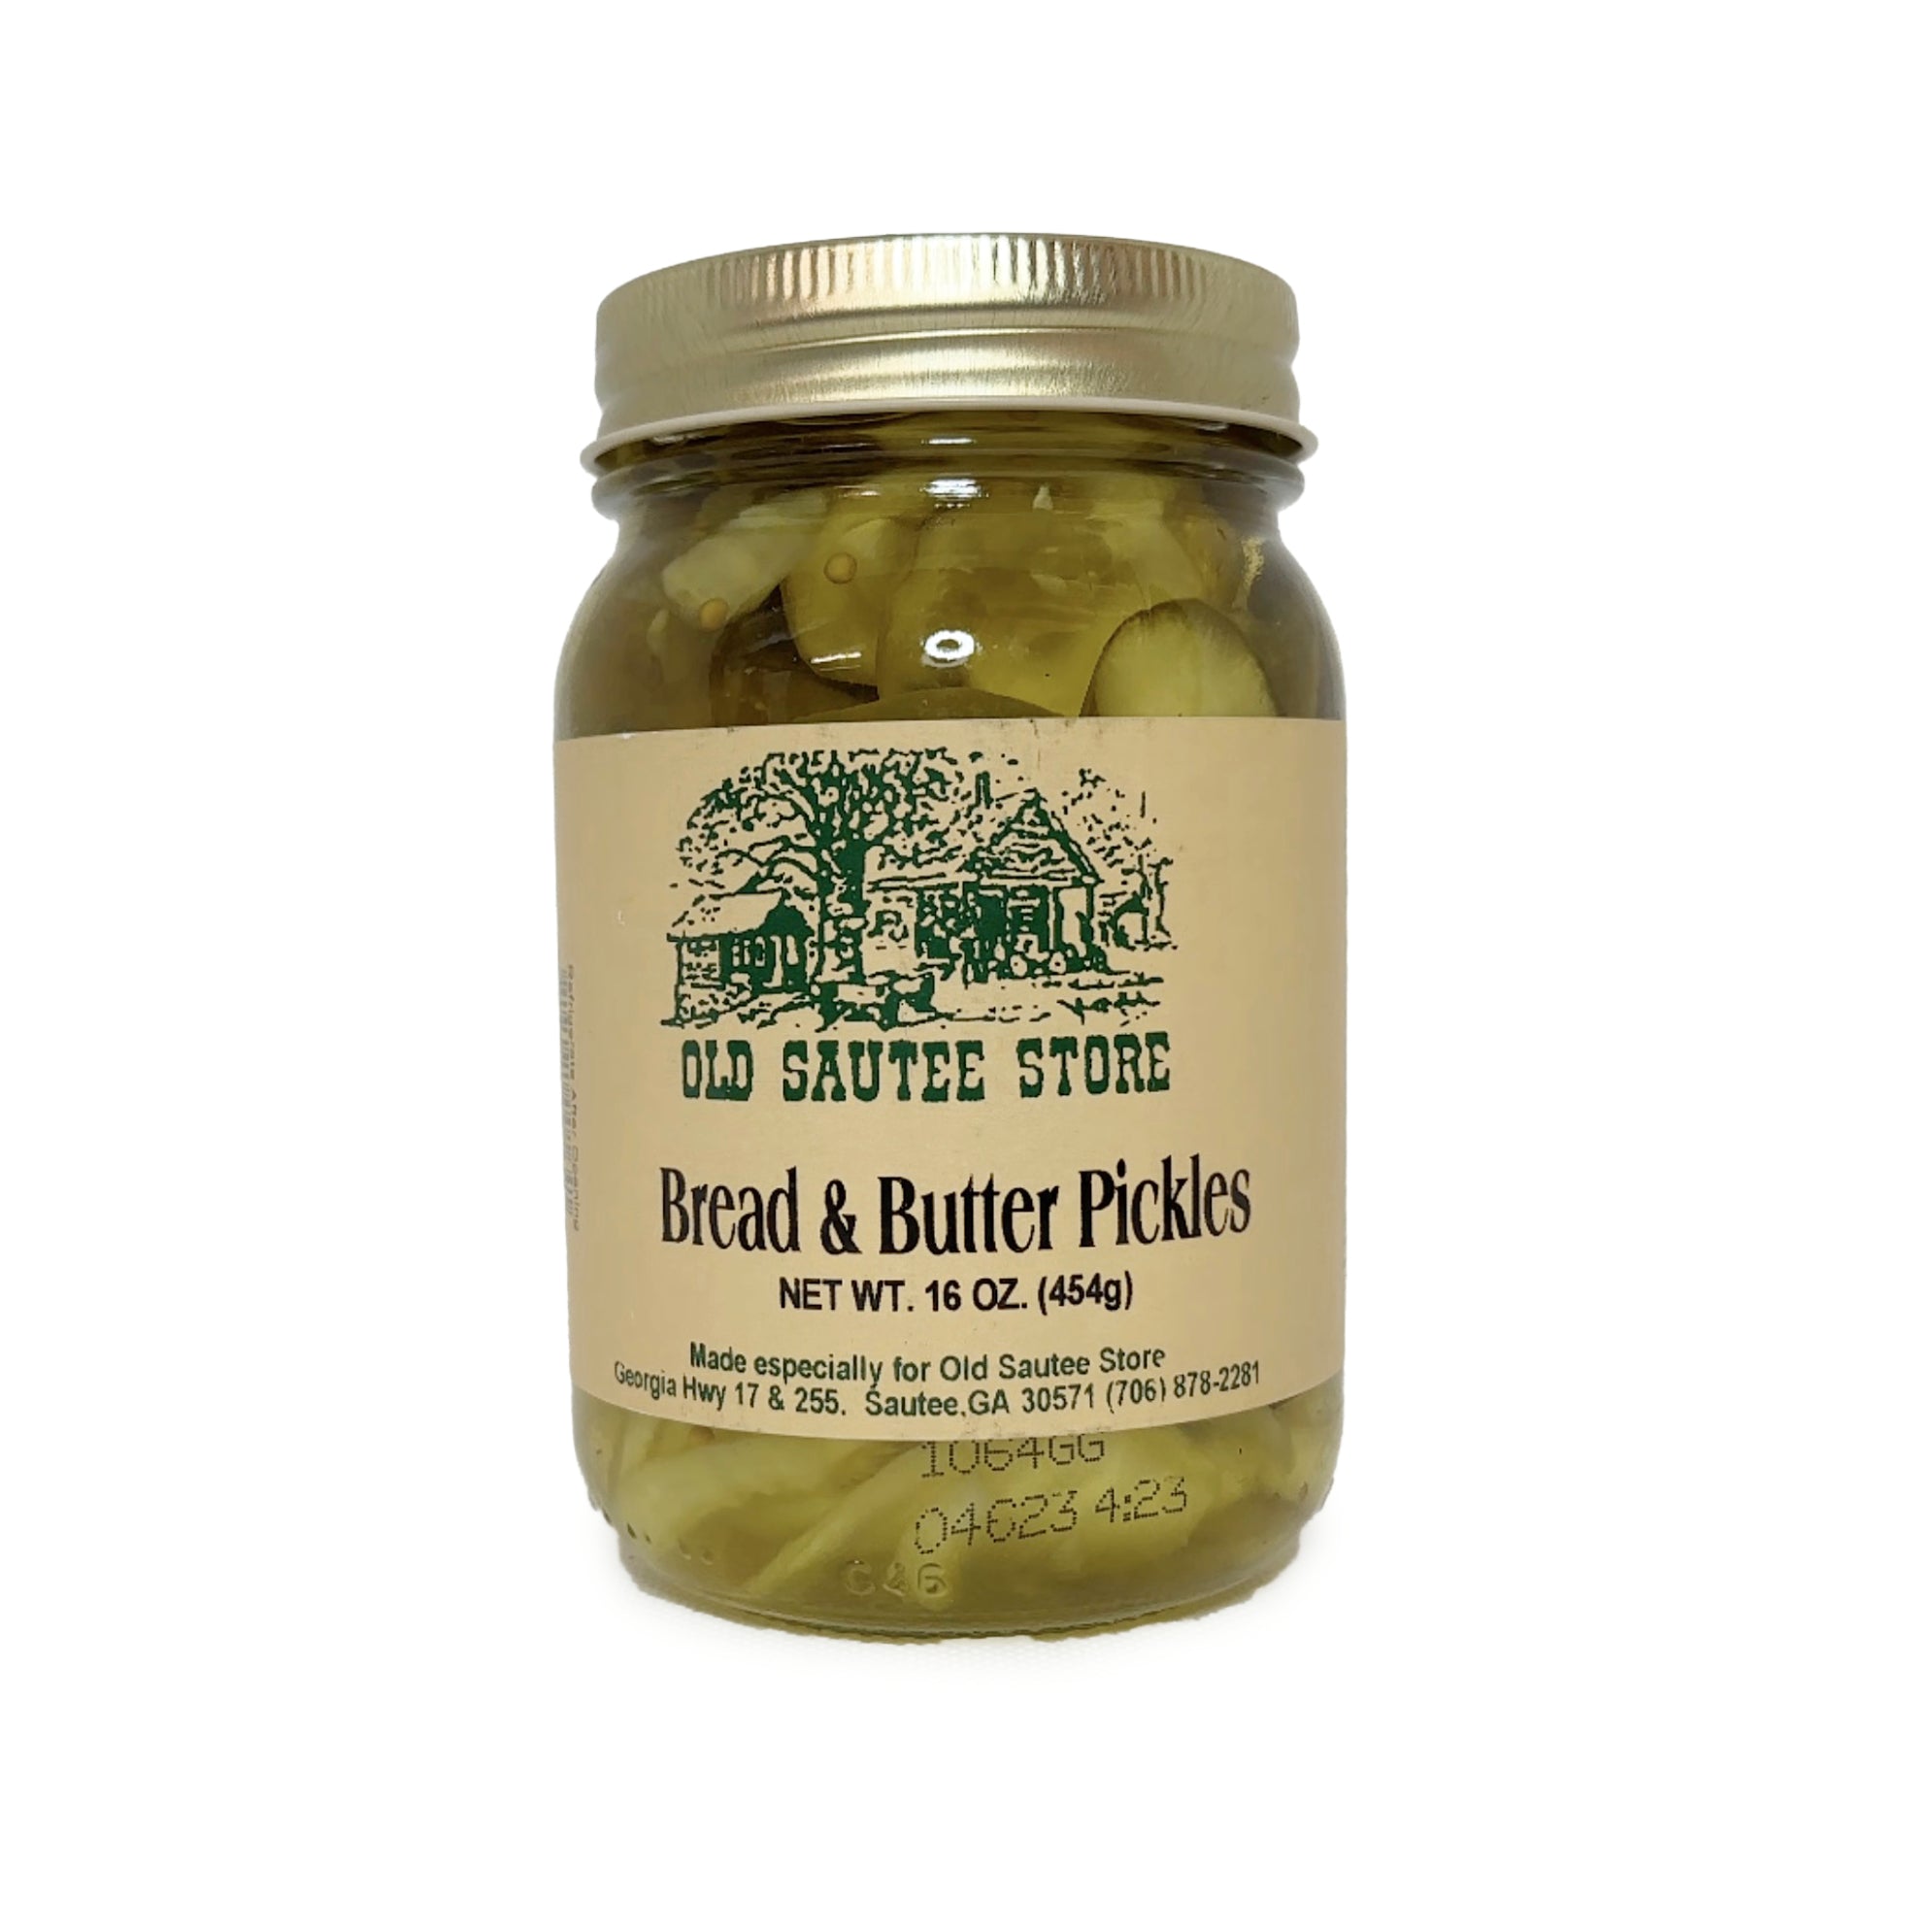 Bread & Butter Pickles (10.5oz)